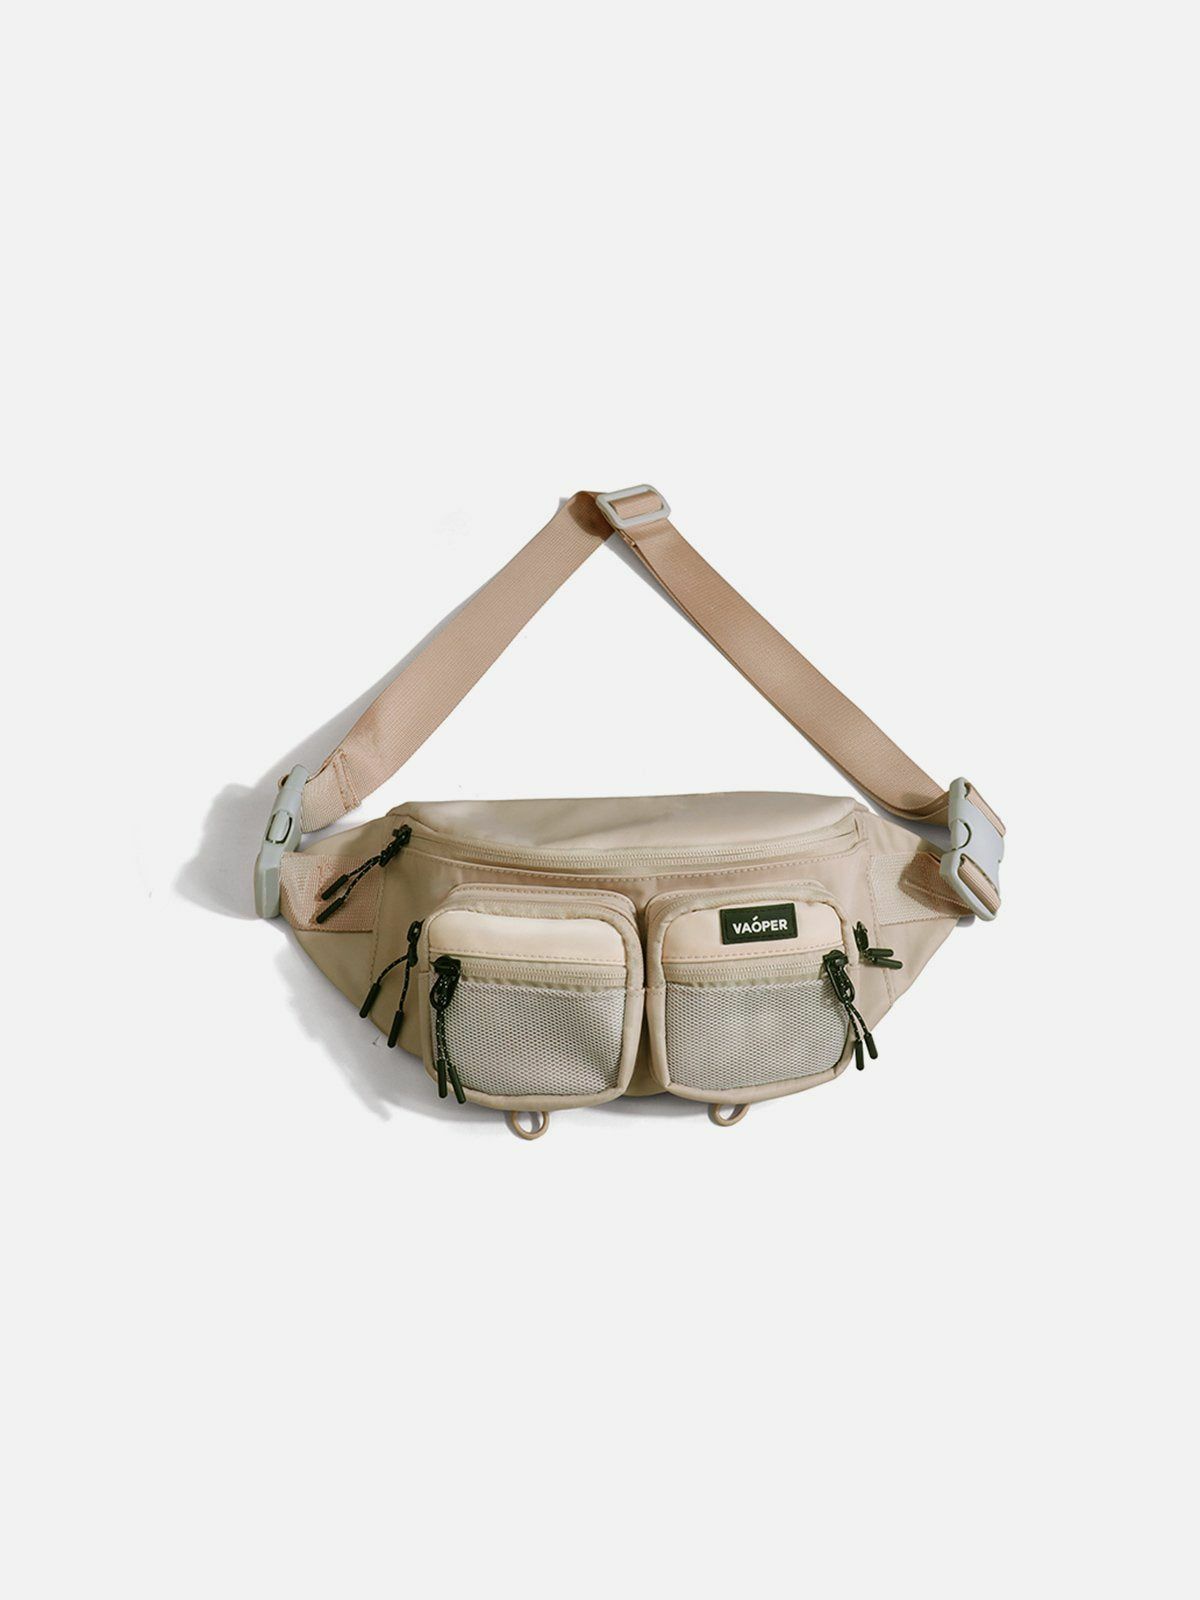 functional crossbody bag chic & edgy streetwear accessory 3389